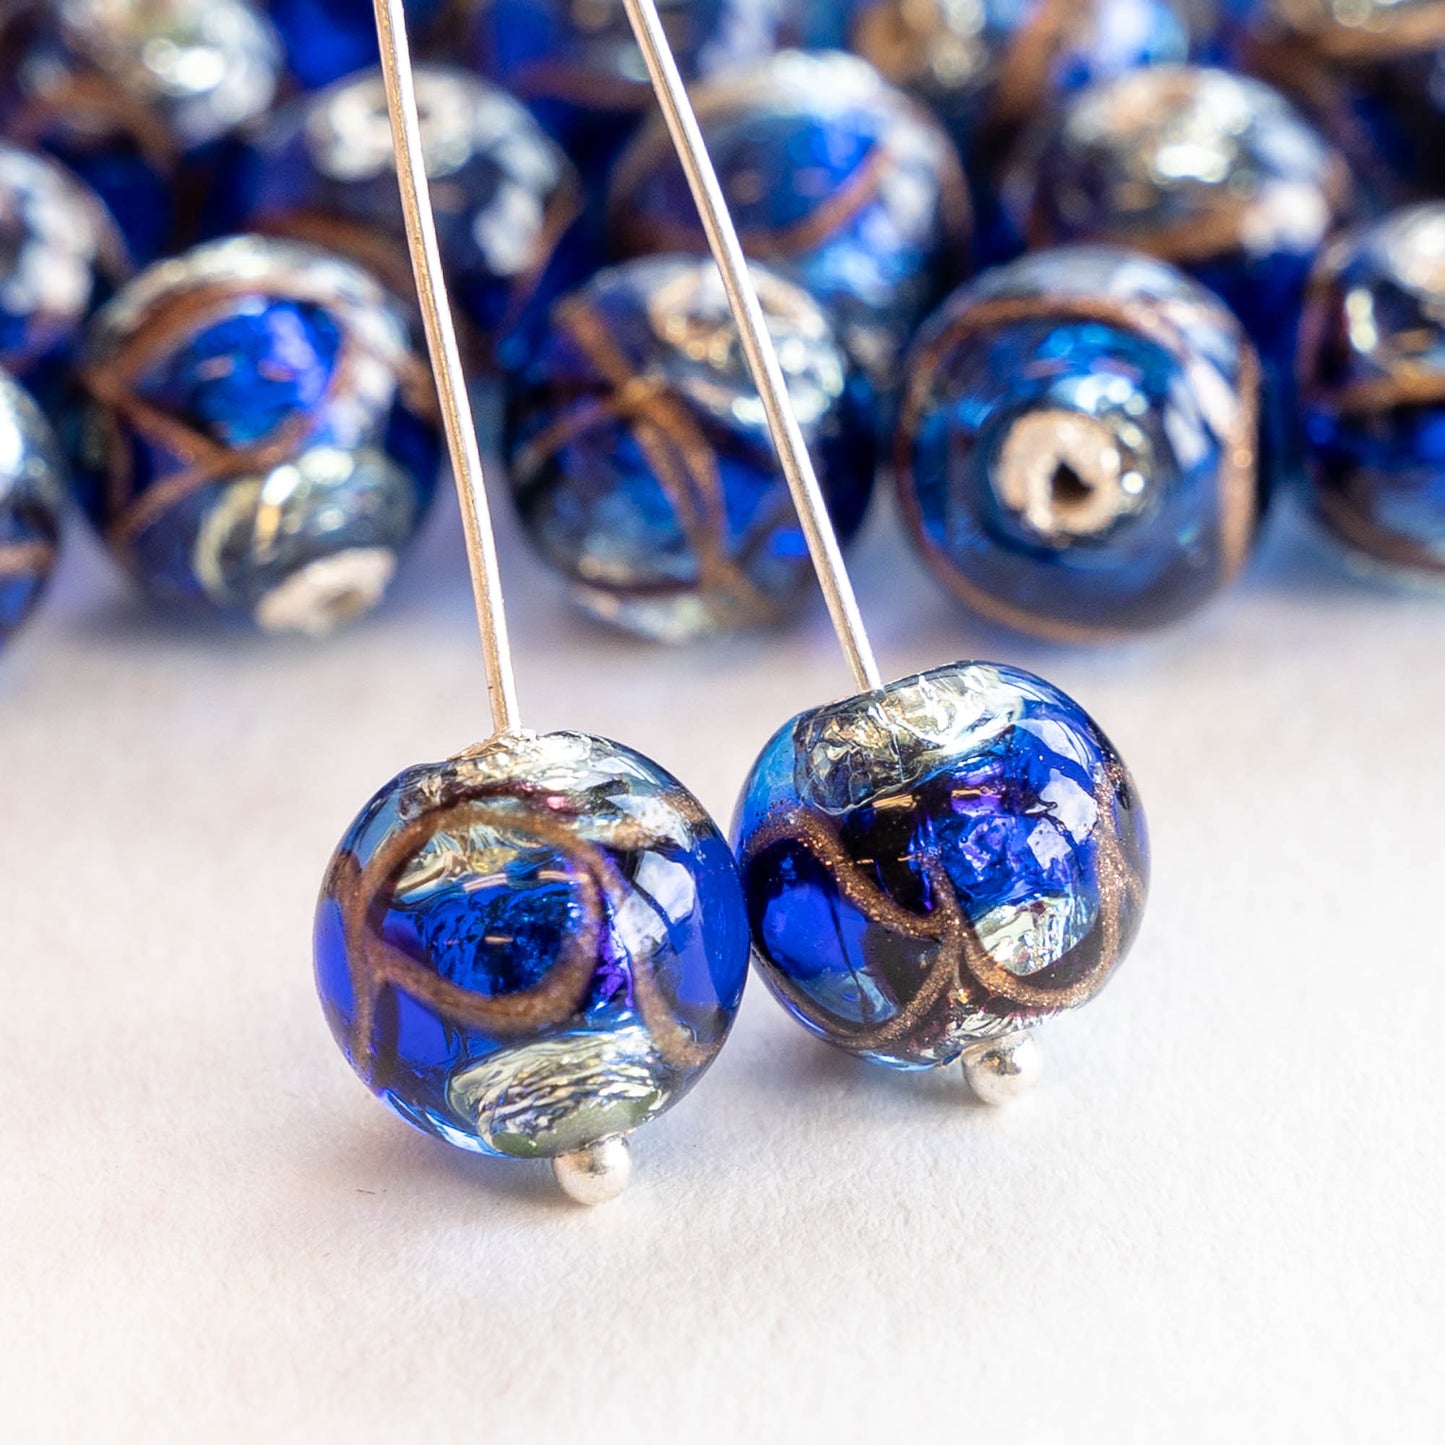 10mm Lampwork Foil Beads - Blue - 2, 4, or 8